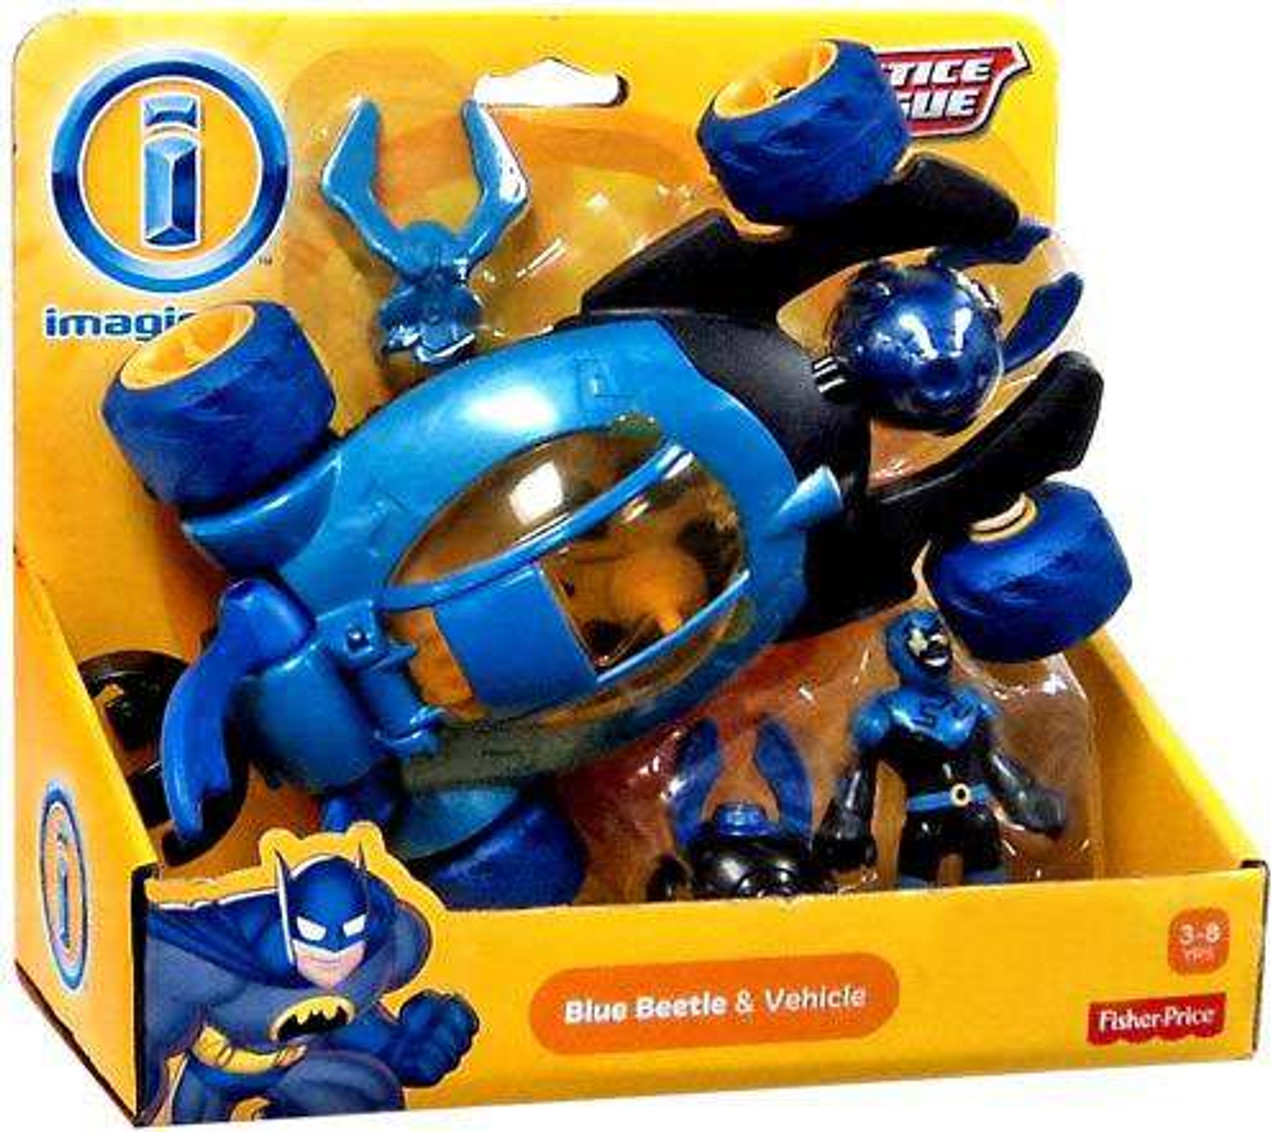 Fisher Price DC Super Friends Justice League Imaginext Blue Beetle